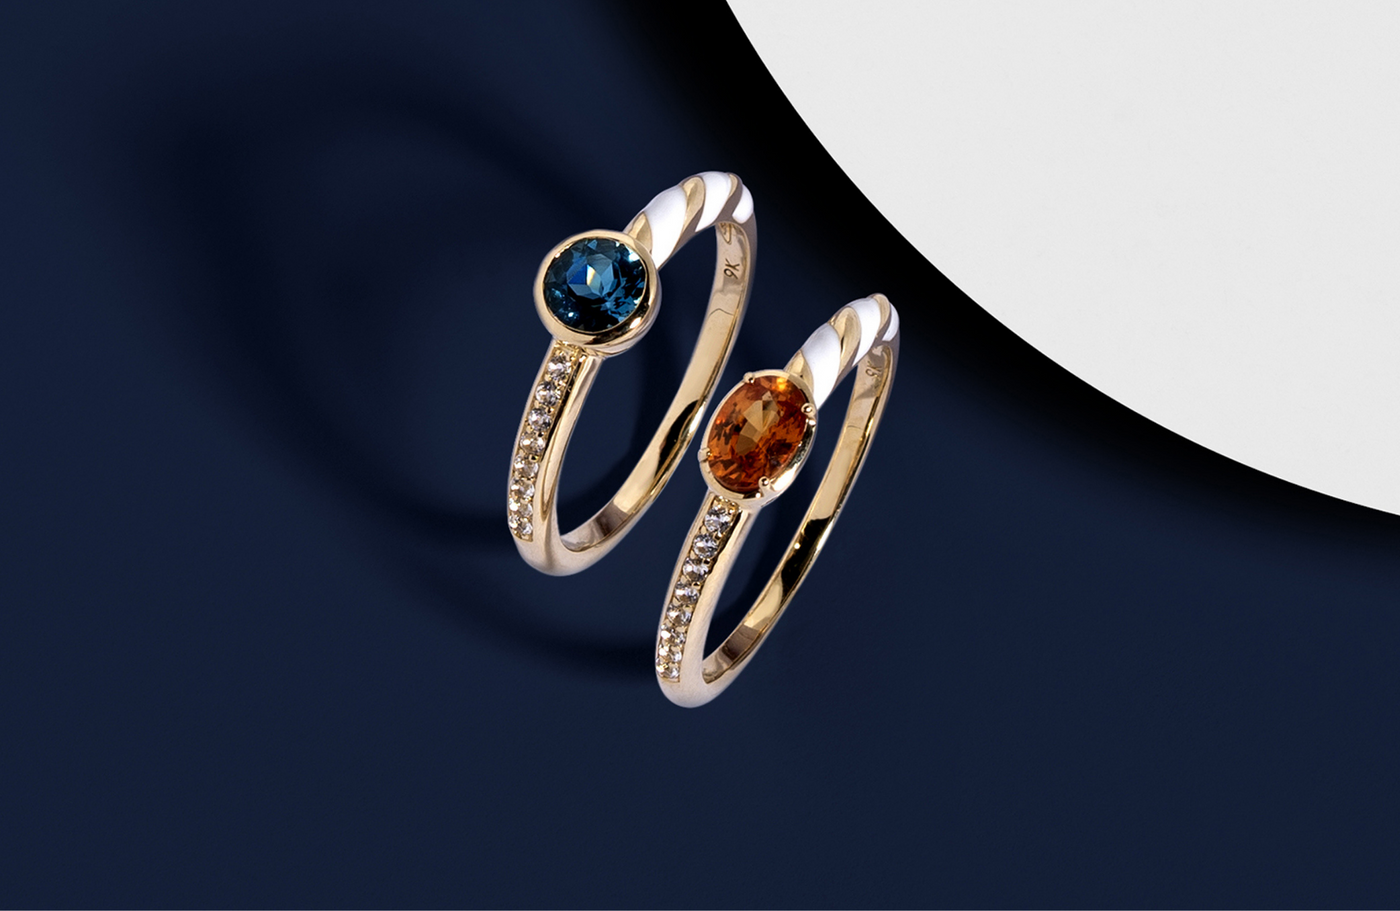 Gemstone rings | Eternity rings, cocktail rings, engagement rings and more